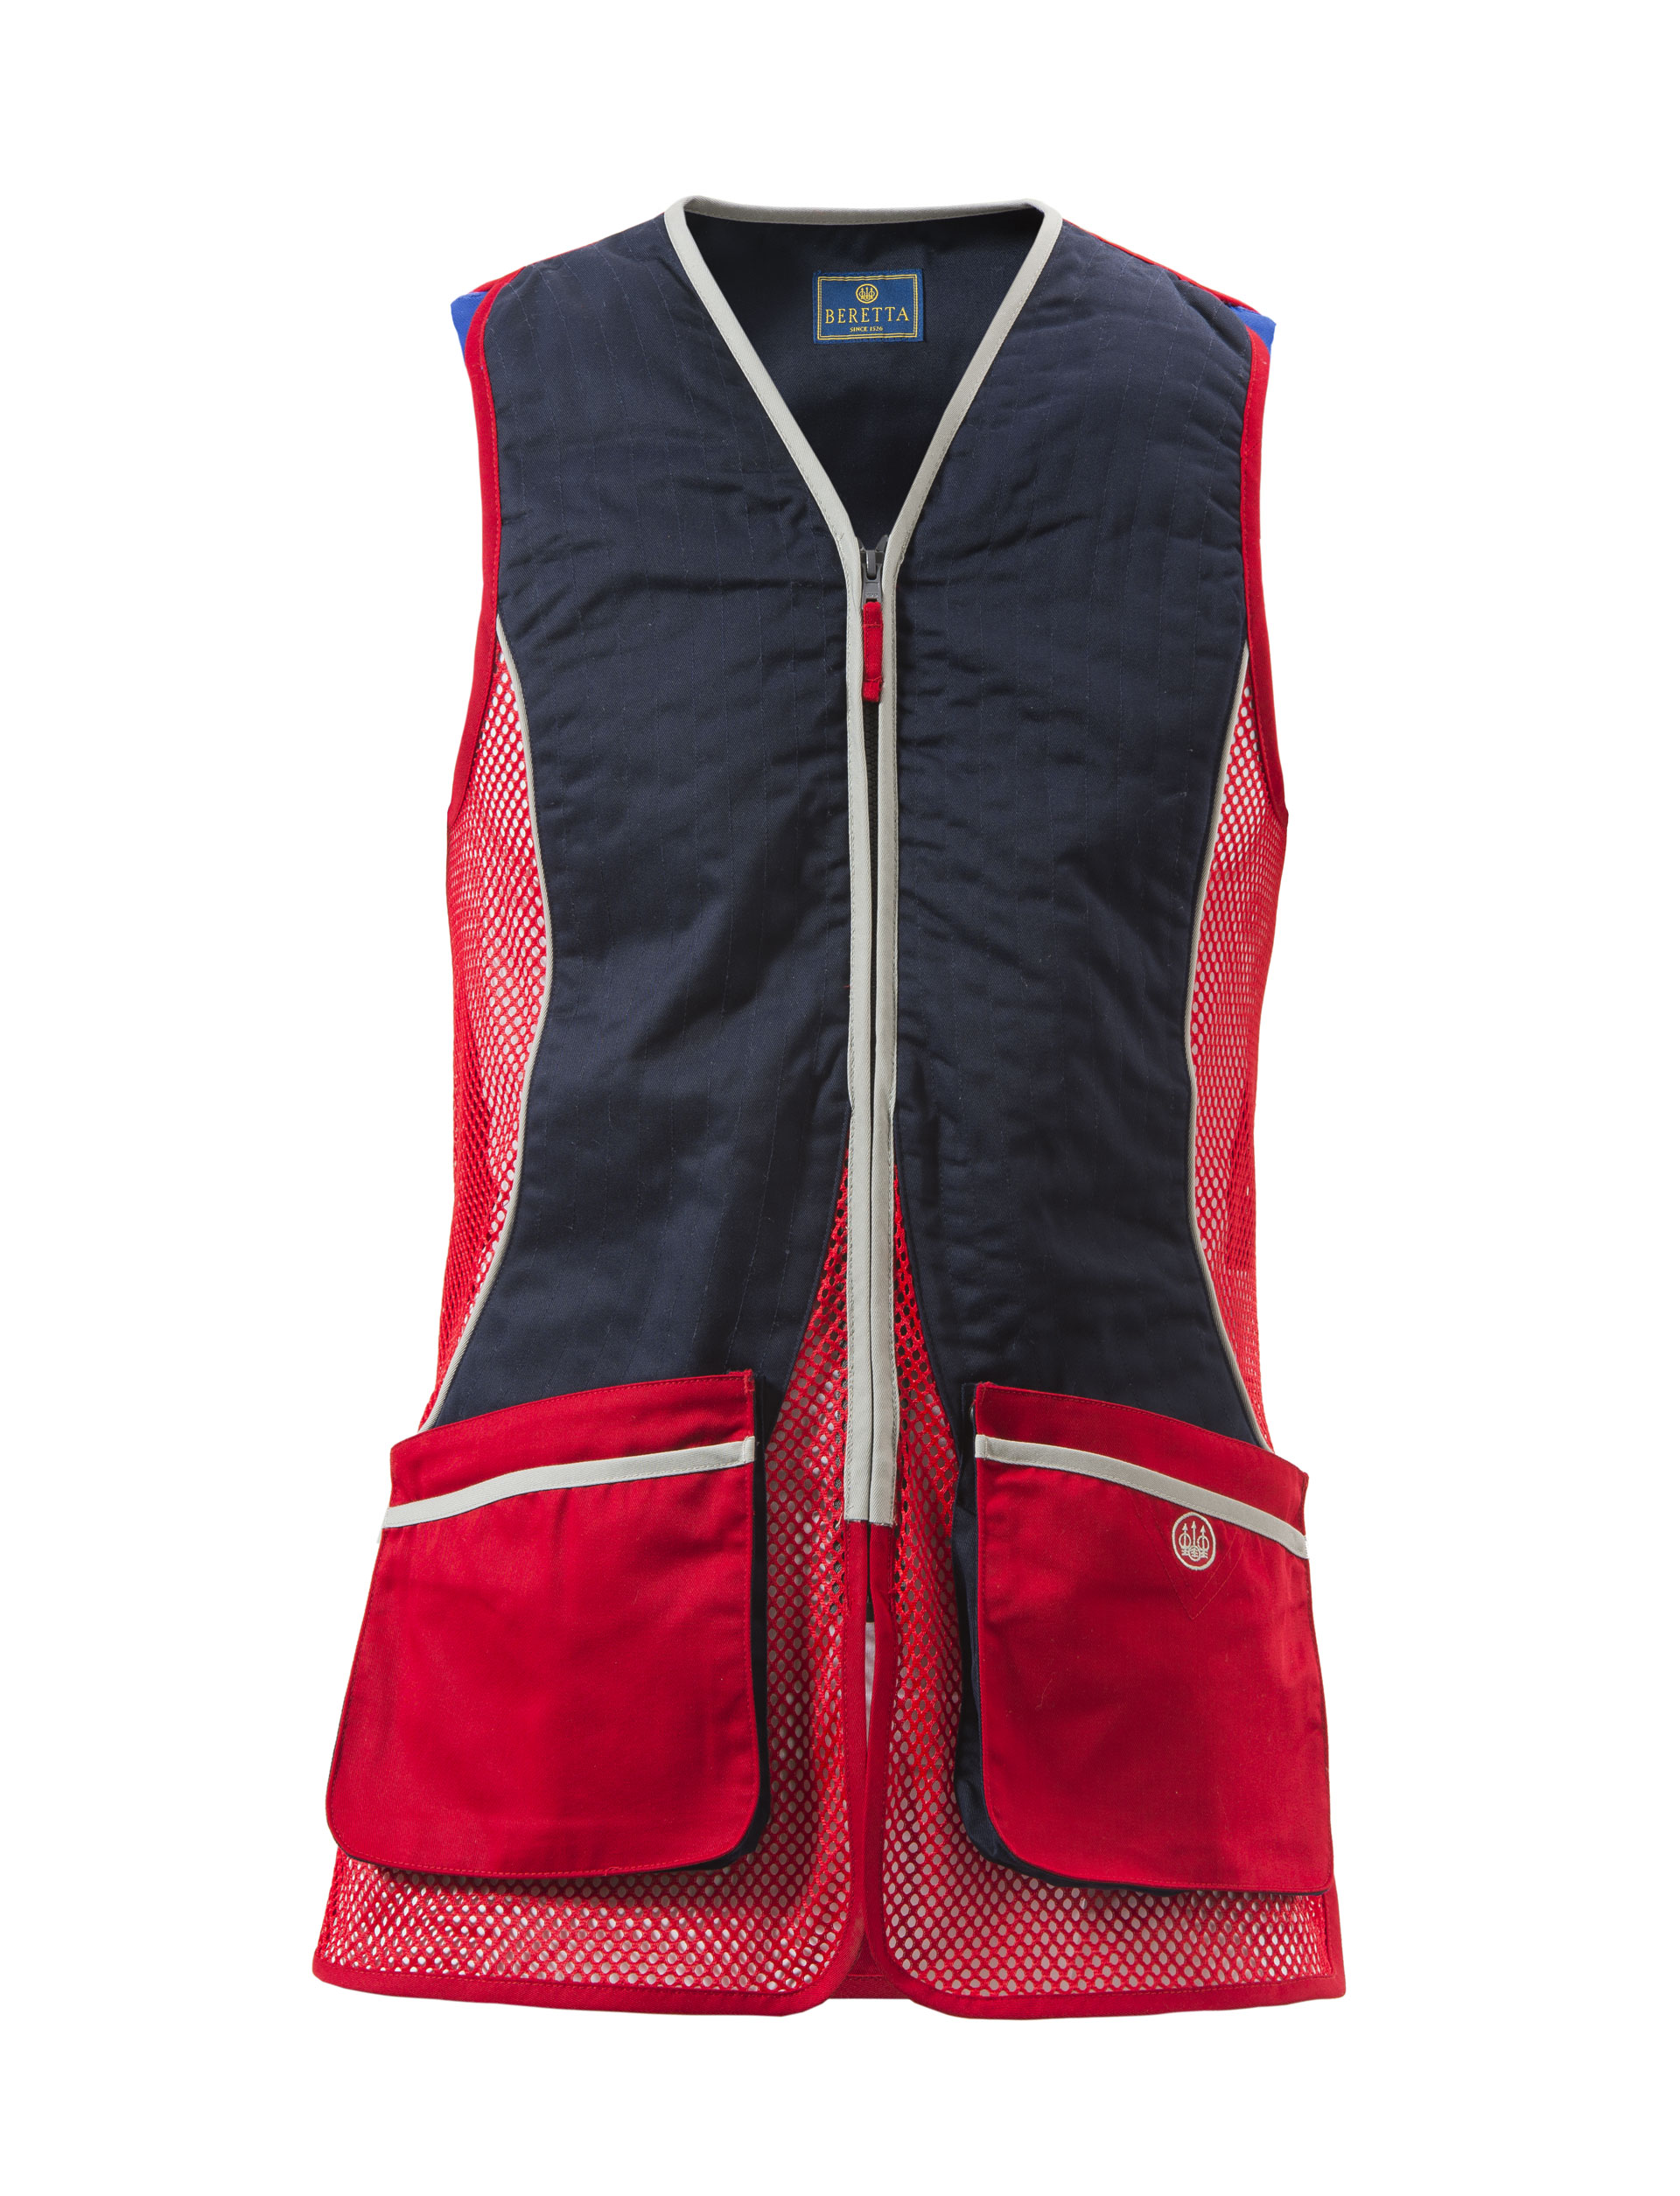 silver pigeon vest mens red.blue_1.jpg